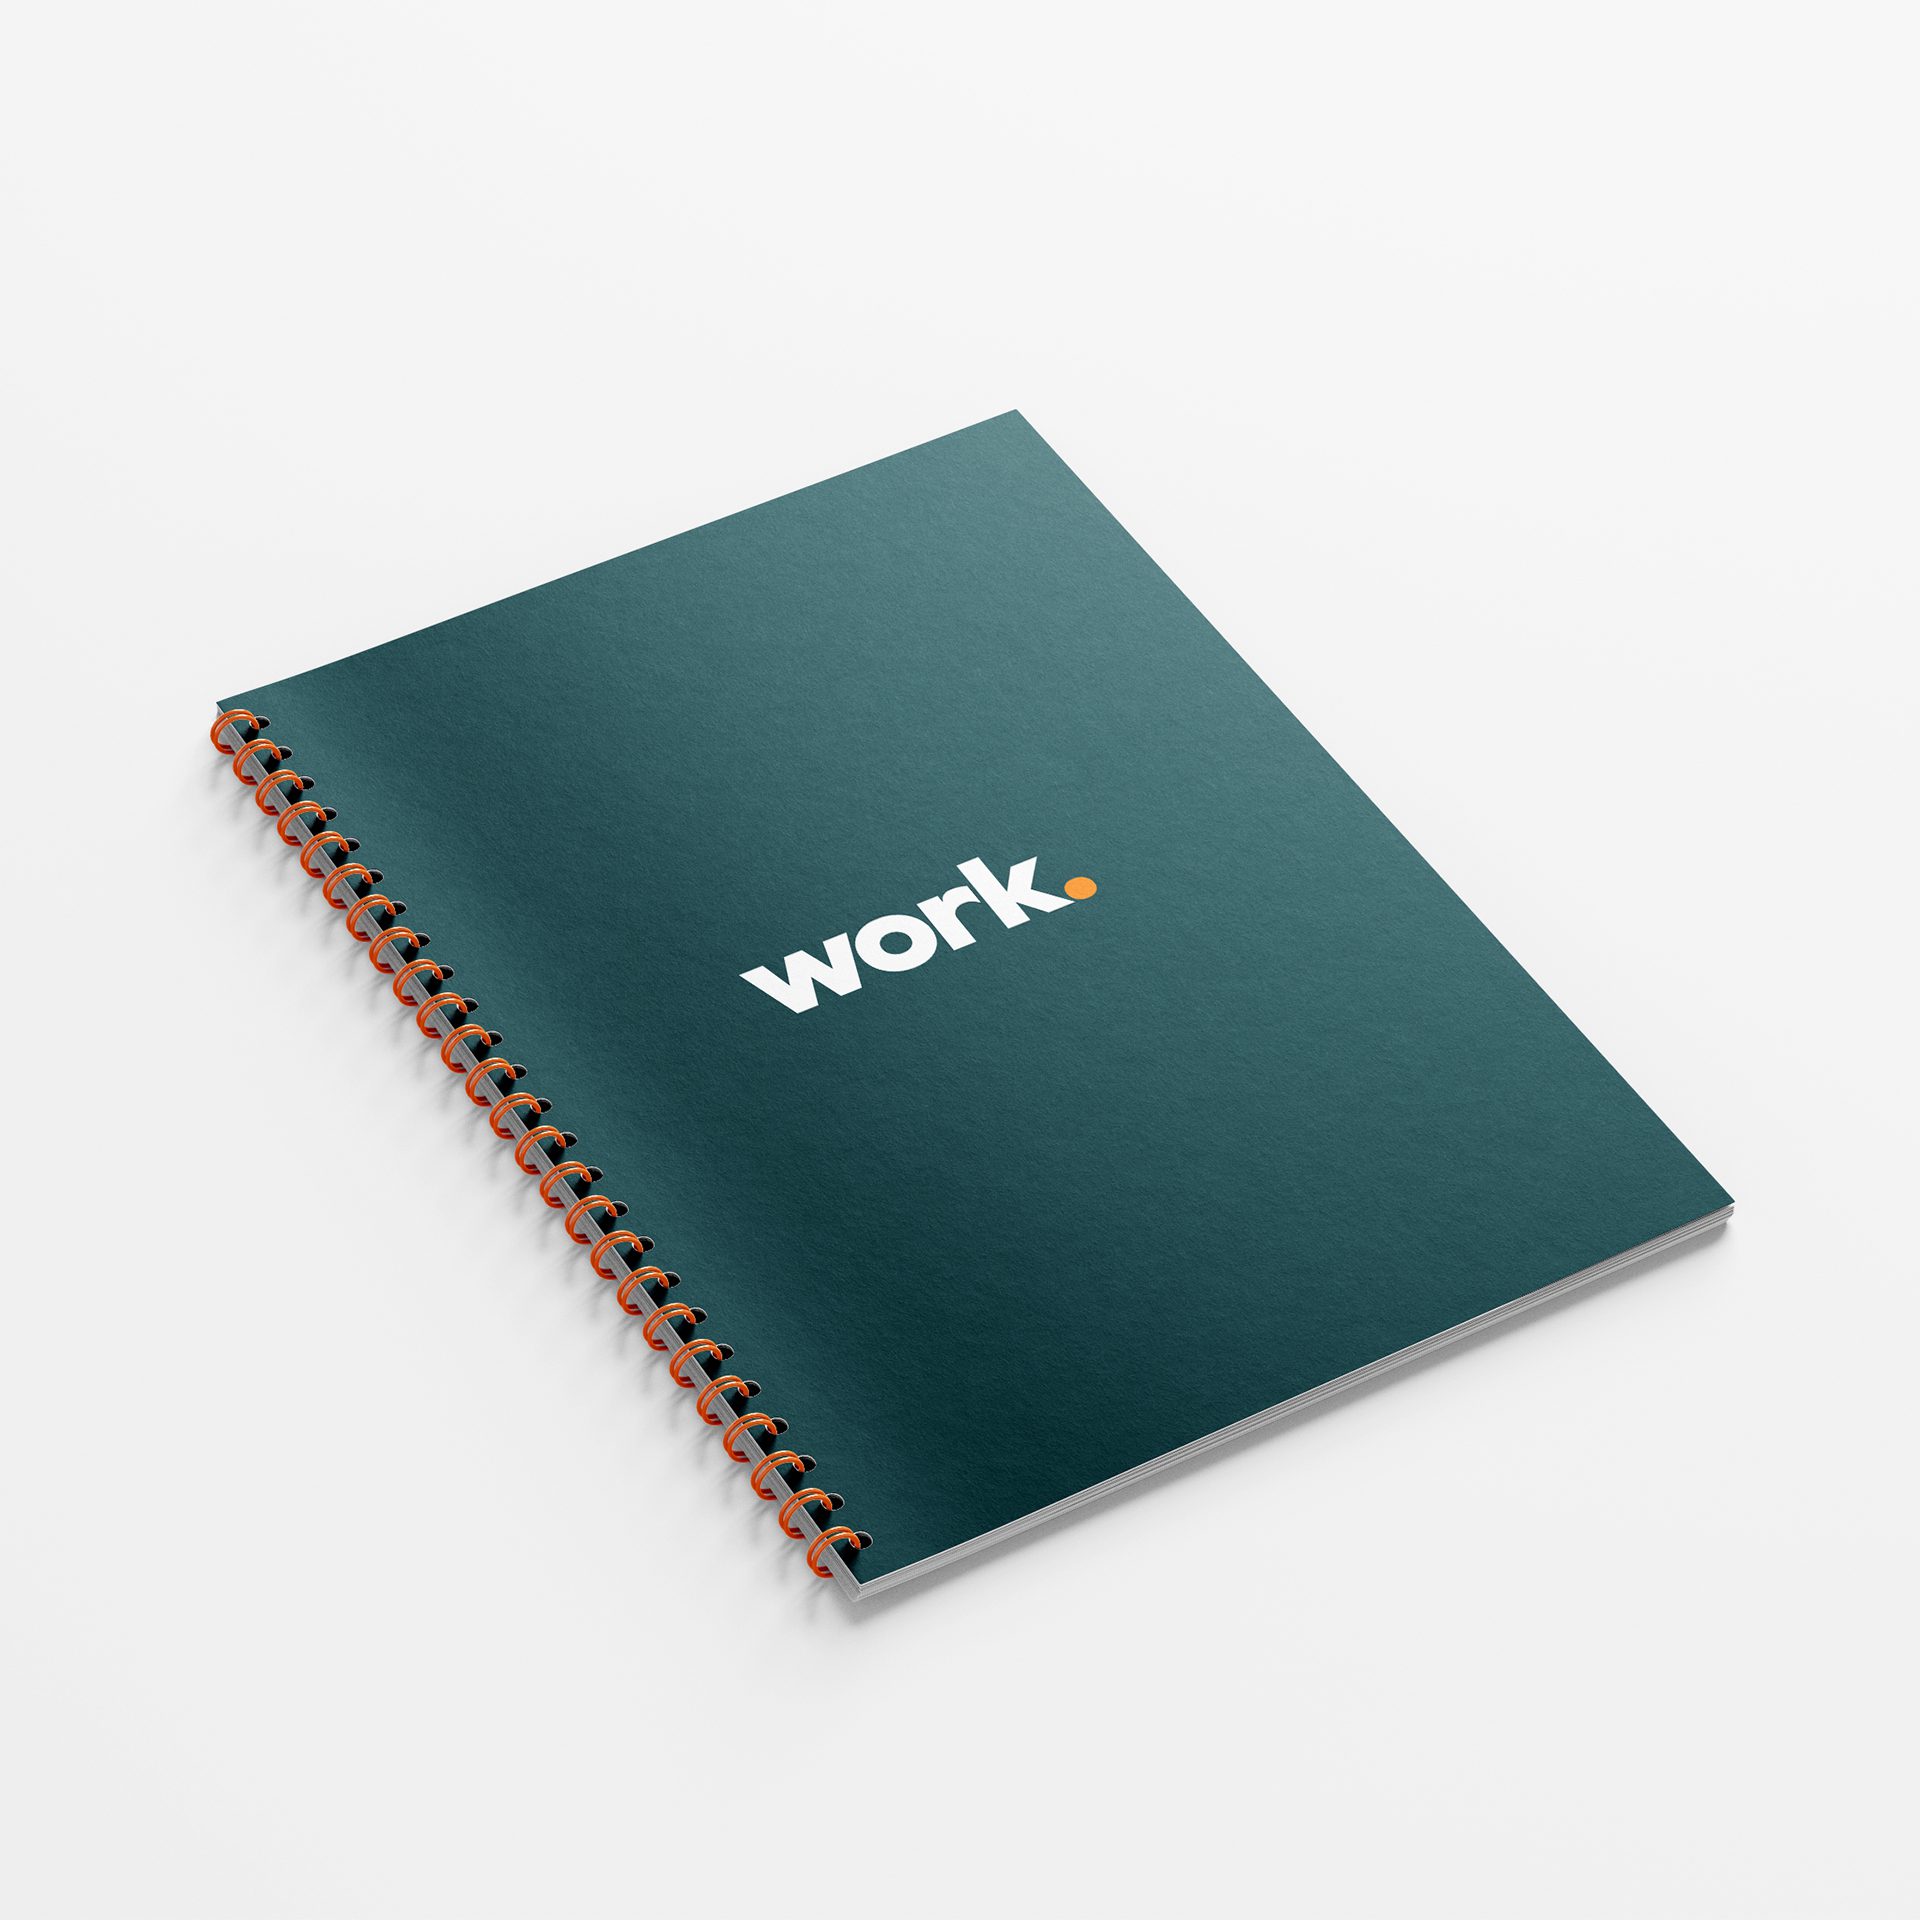 Work pitch book